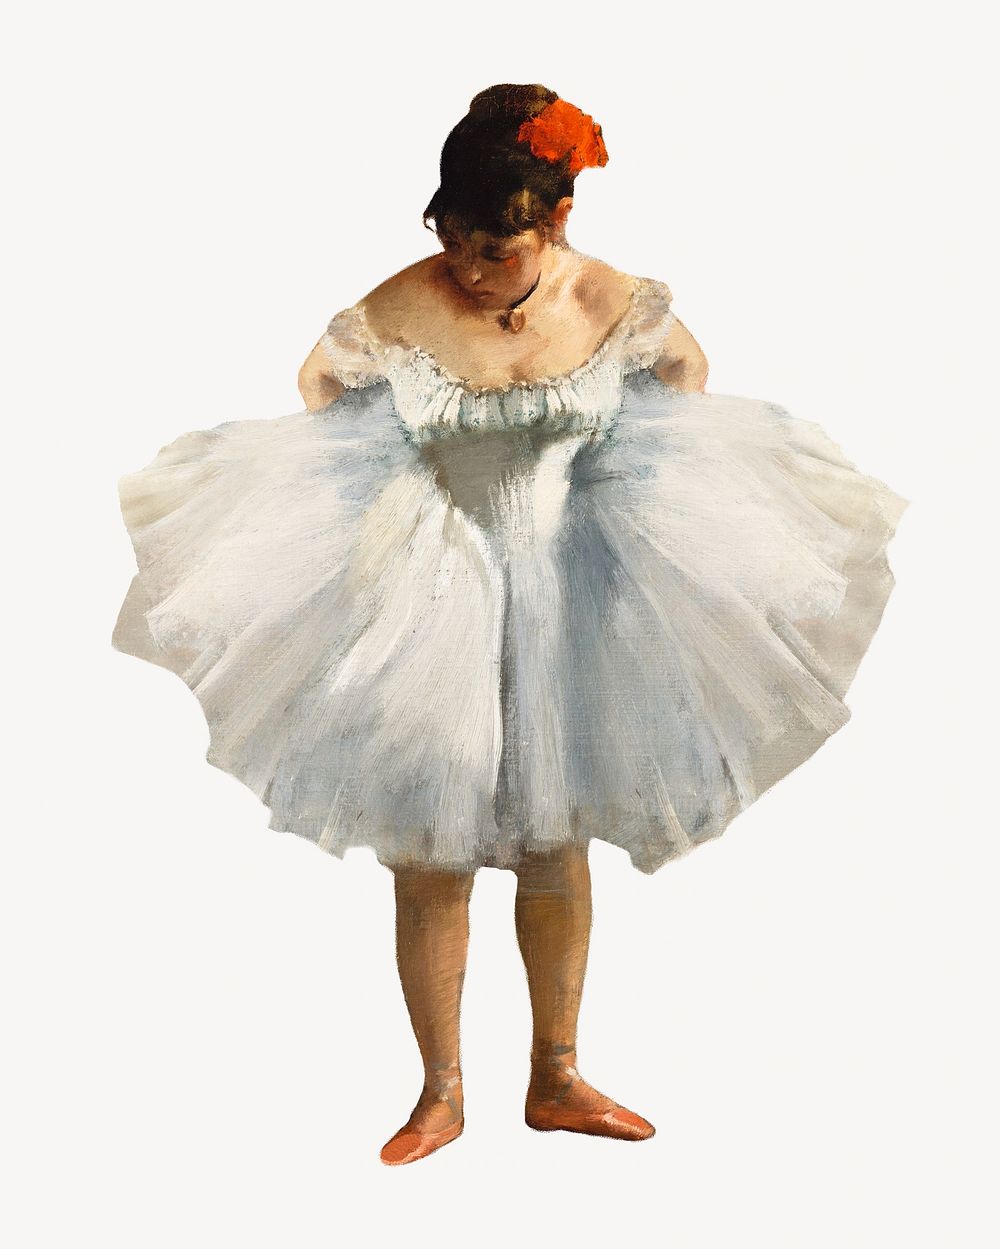 Vintage ballerina, Edgar Degas' famous artwork The Dance Class, remixed by rawpixel